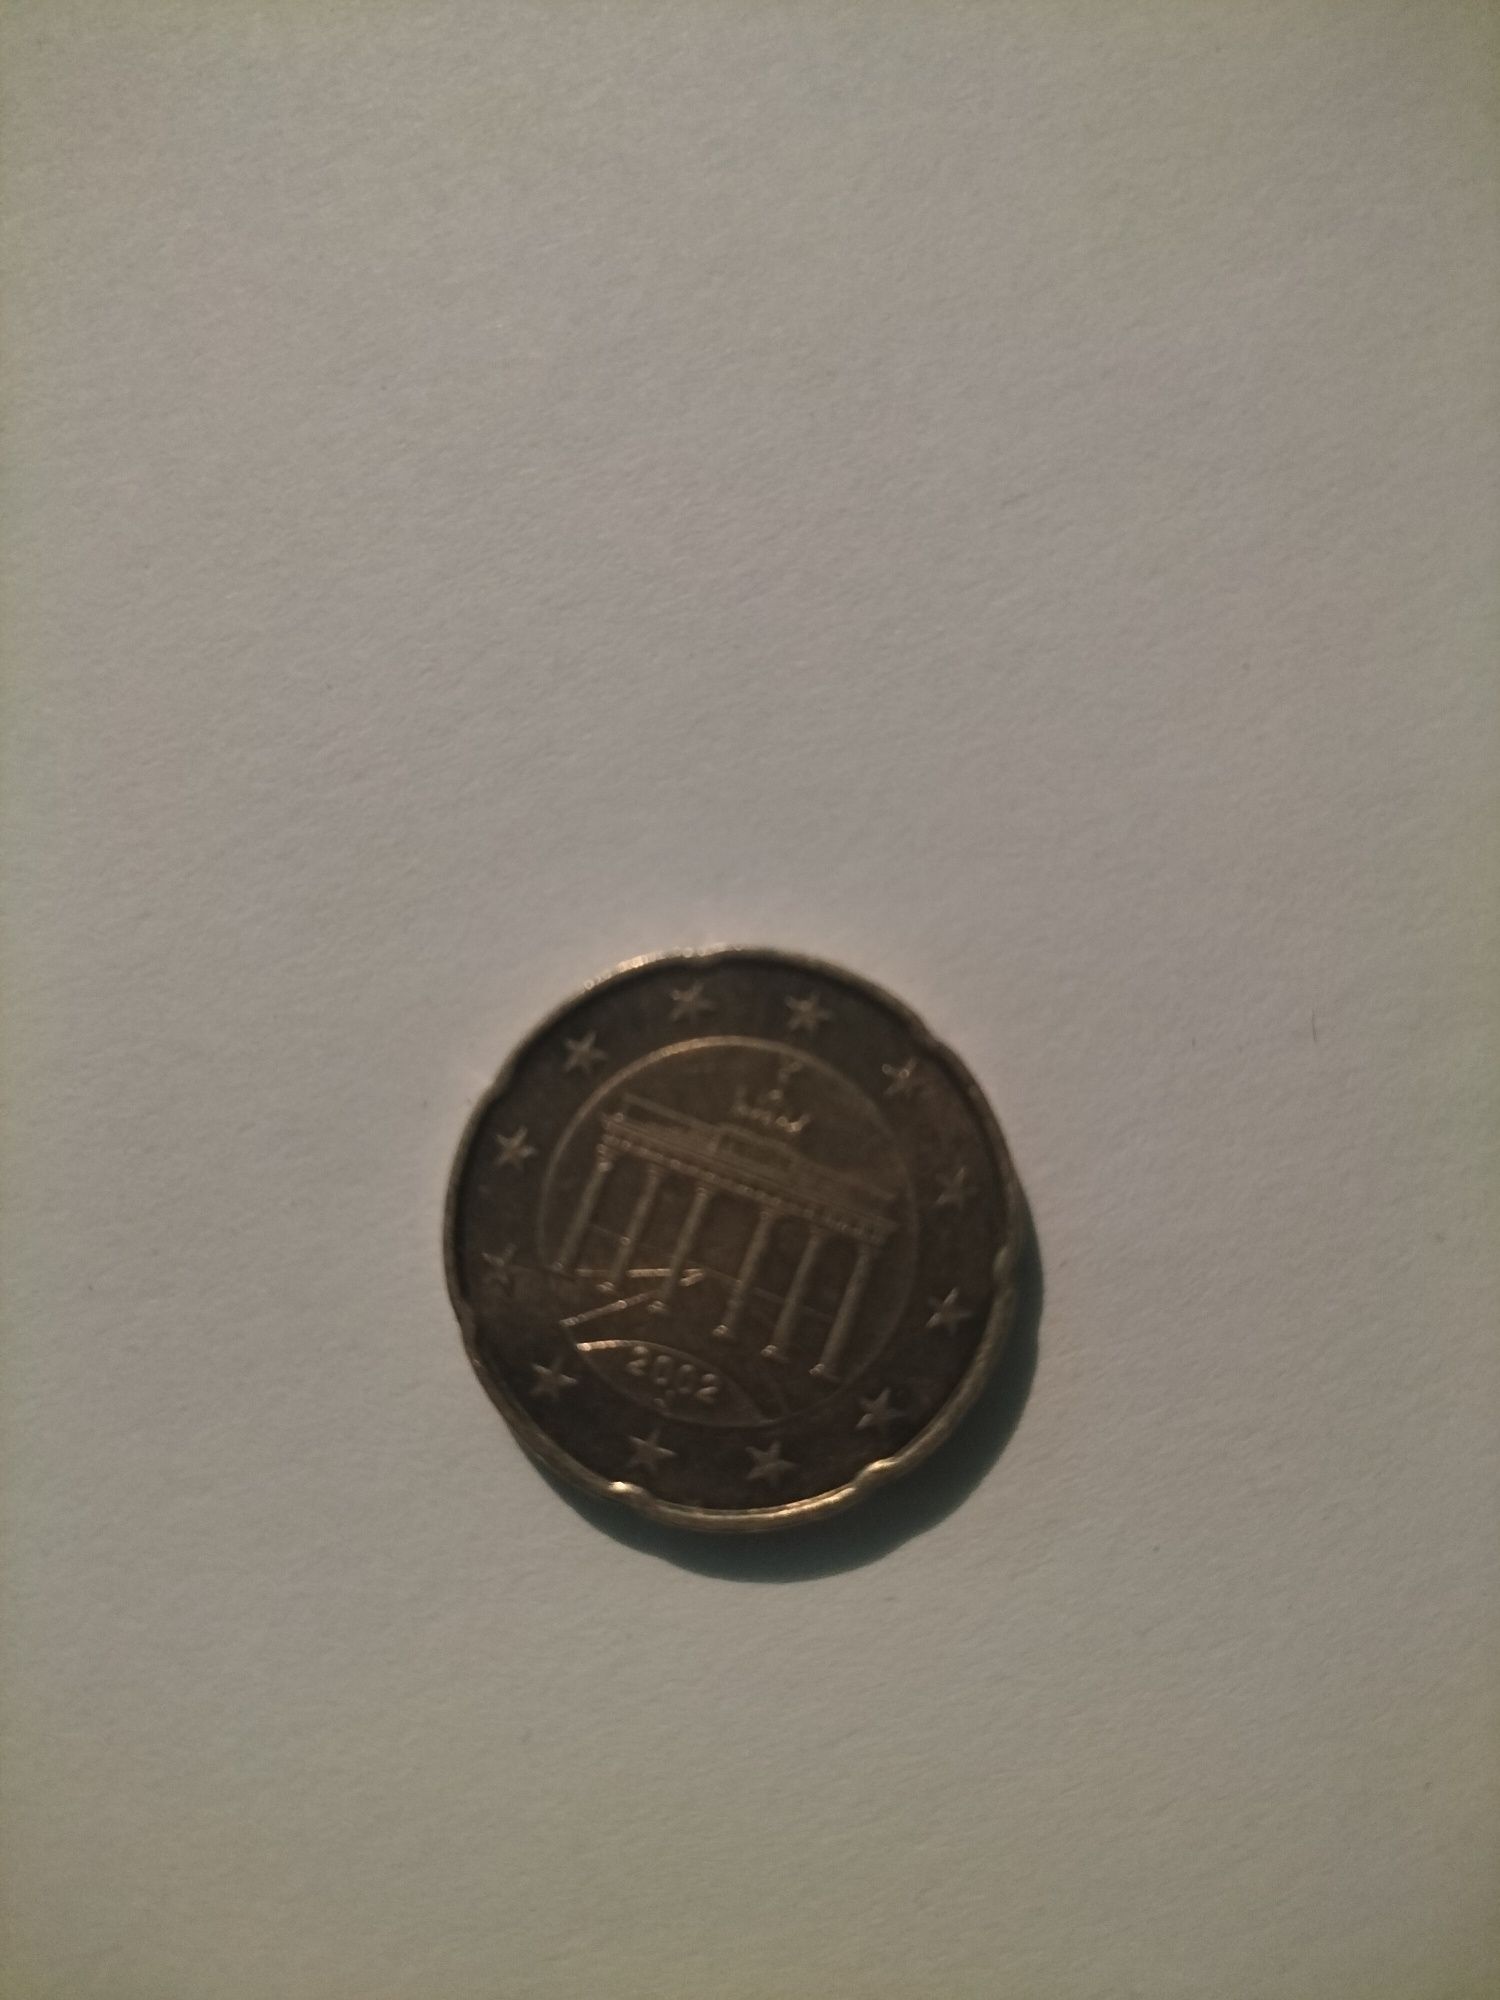 Monede vechi din 2002 de 1 euro și 20 centi